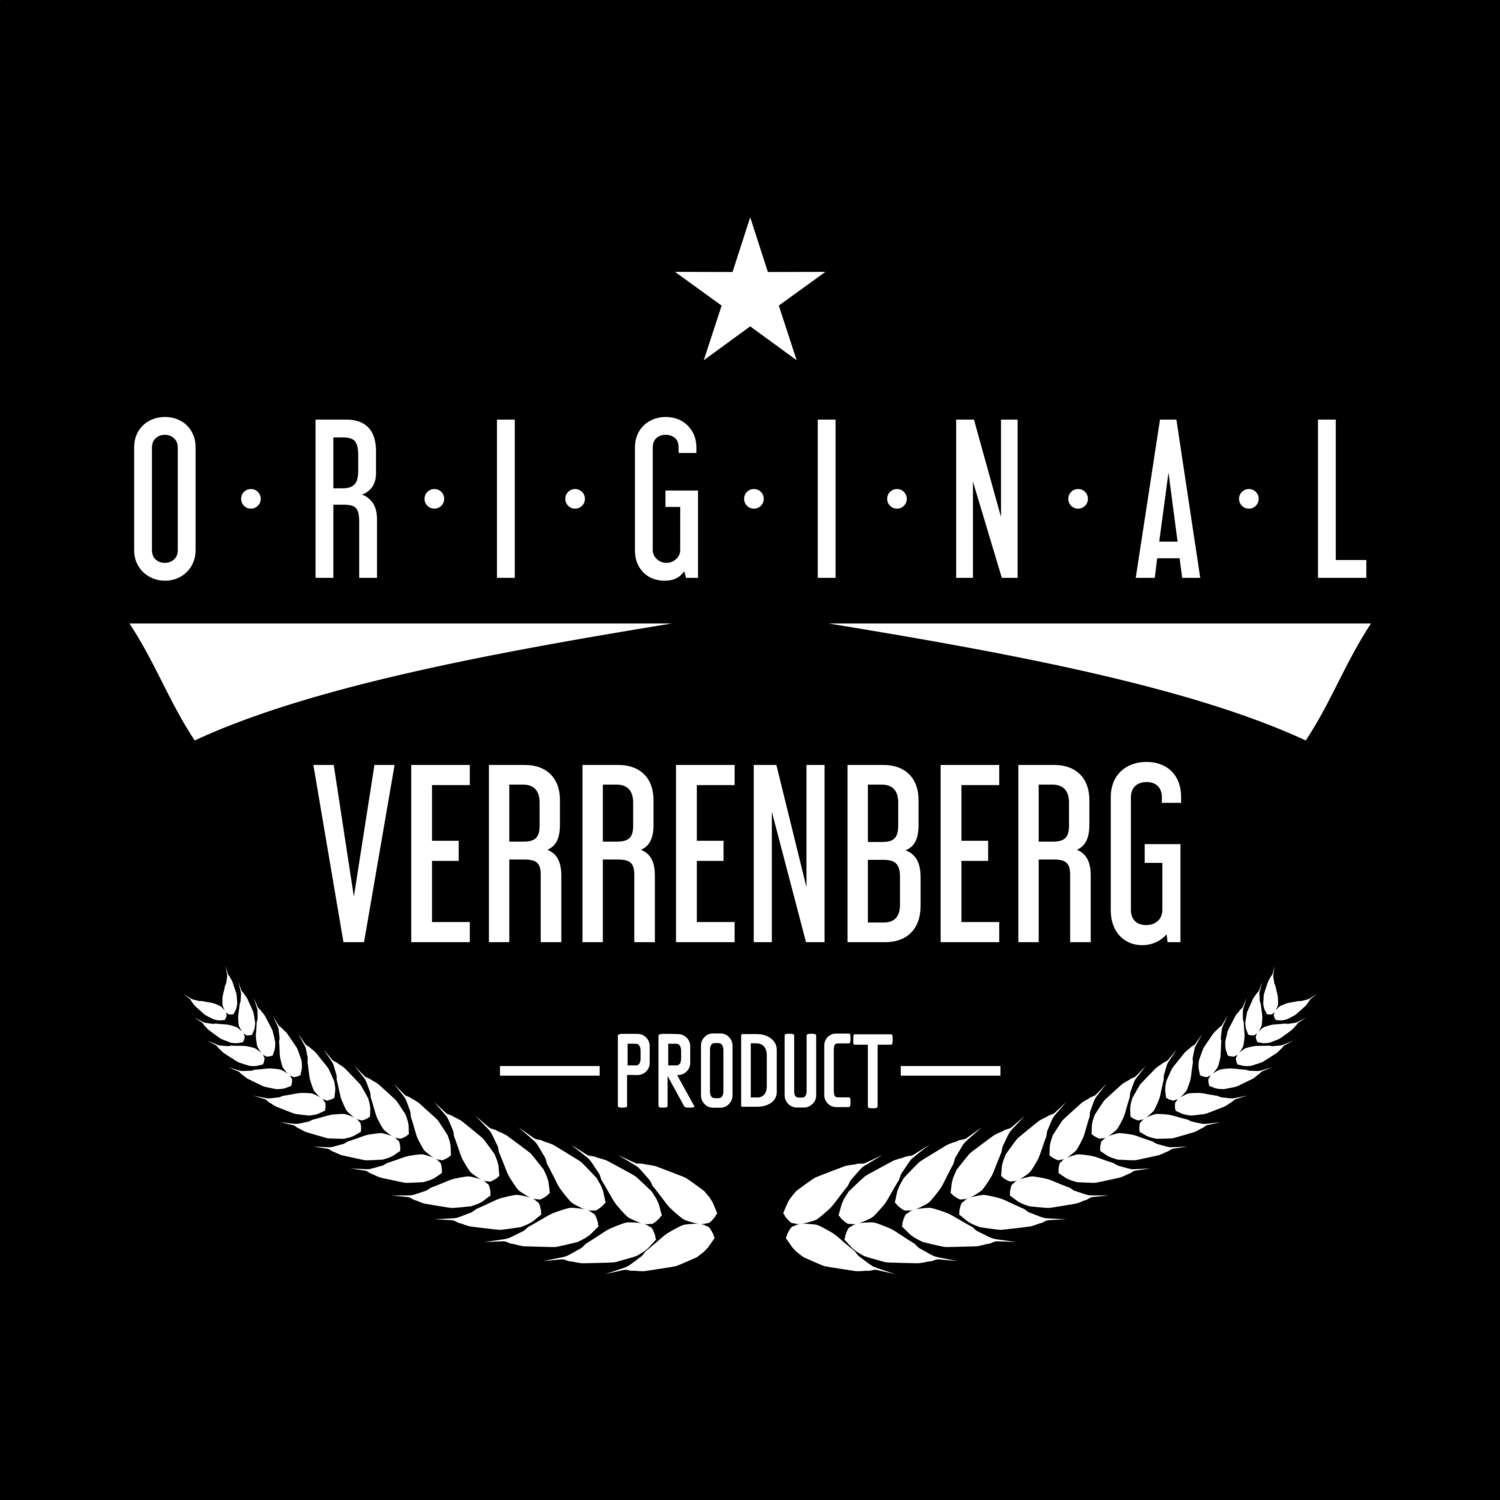 Verrenberg T-Shirt »Original Product«